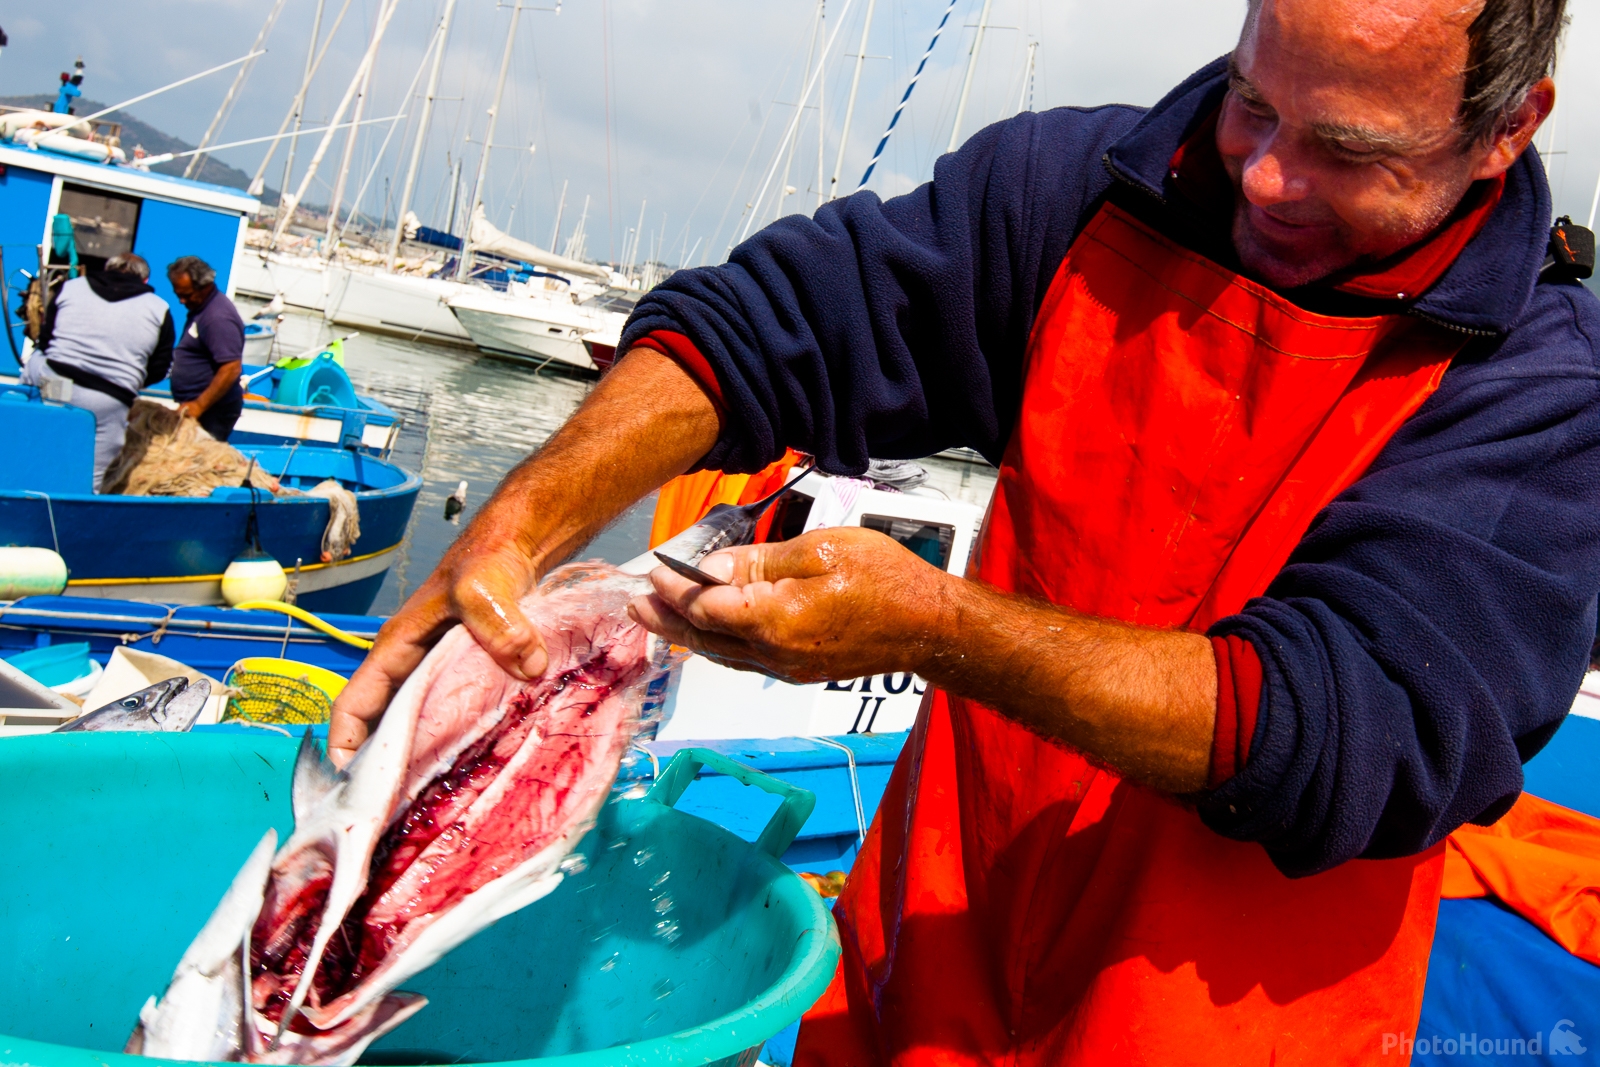 Image of Pozzuoli – Fish Market and Fisherman by the Port by Raimondo Giamberduca